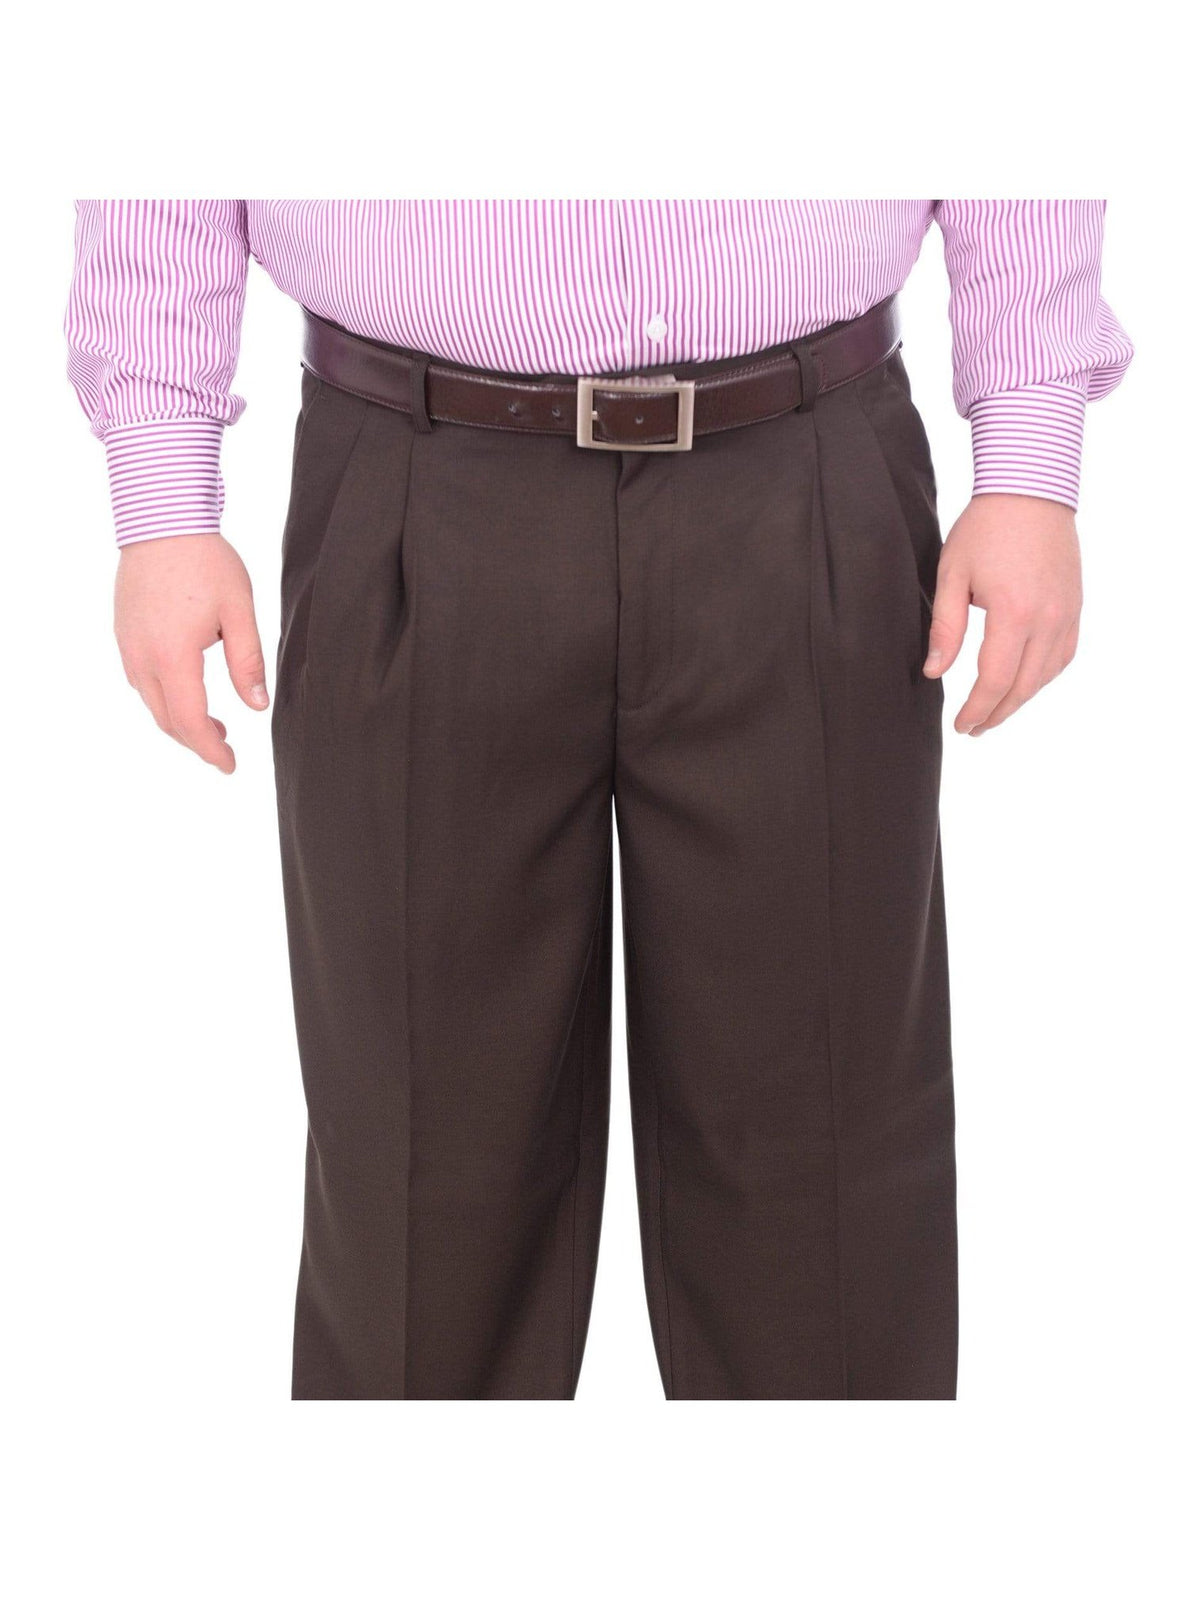 Mazari PANTS Mazari Mens Classic Fit Solid Brown Double Pleated Washable Cuffed Dress Pants